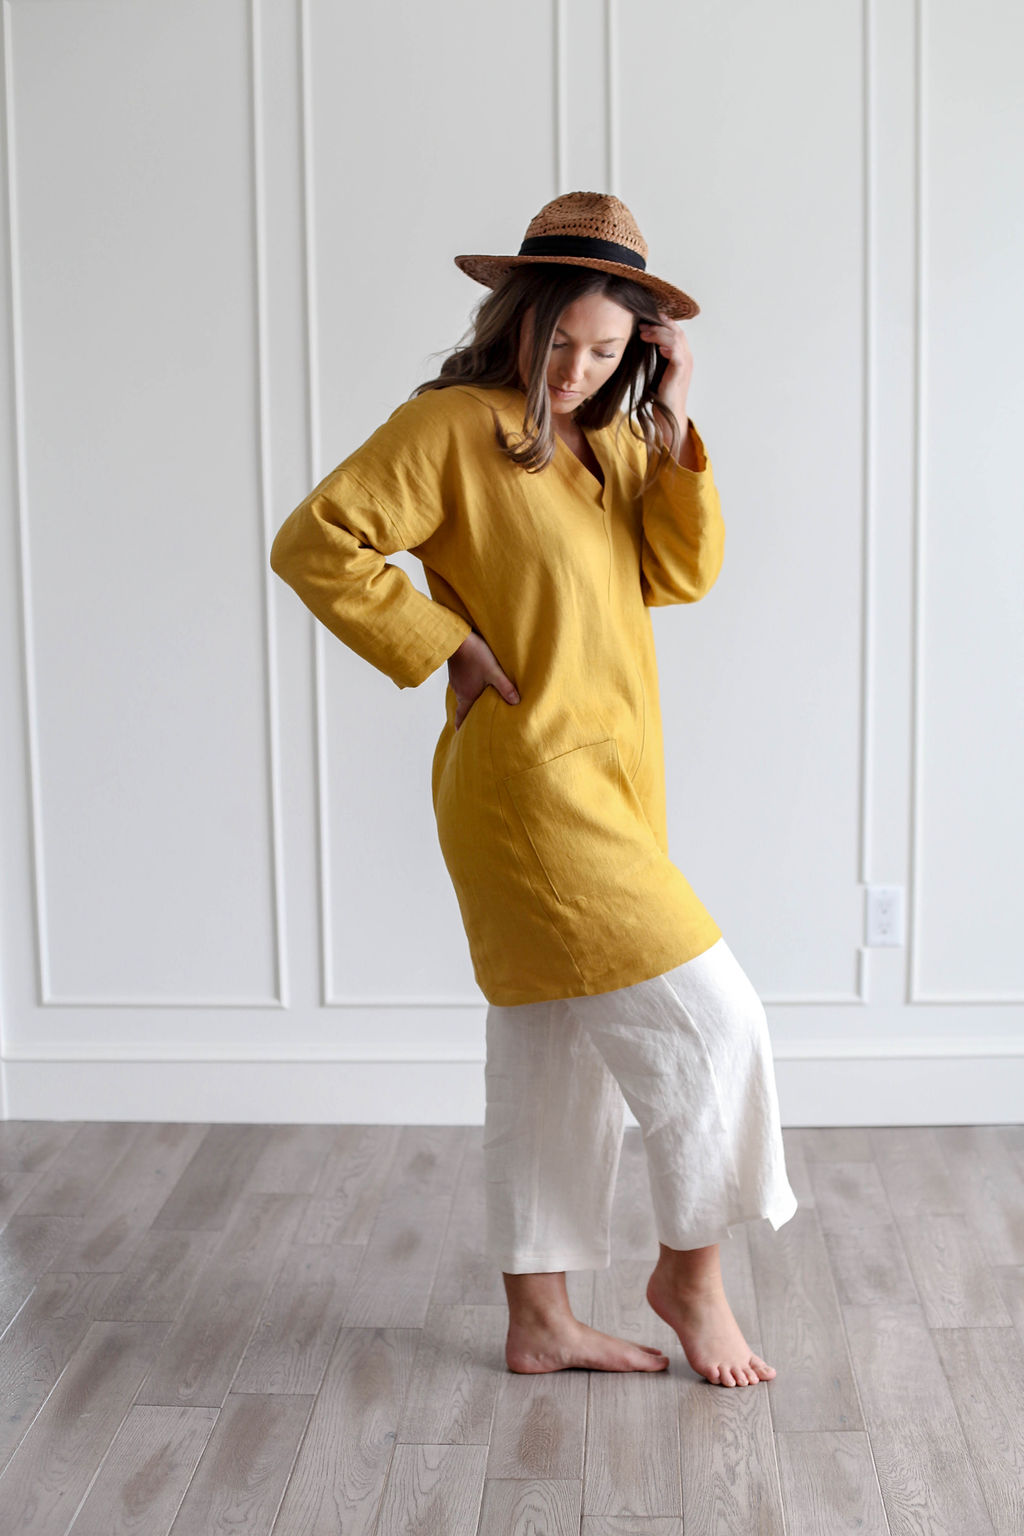 Nomi Designs Handsewn slow fashion mustard tunic.jpg